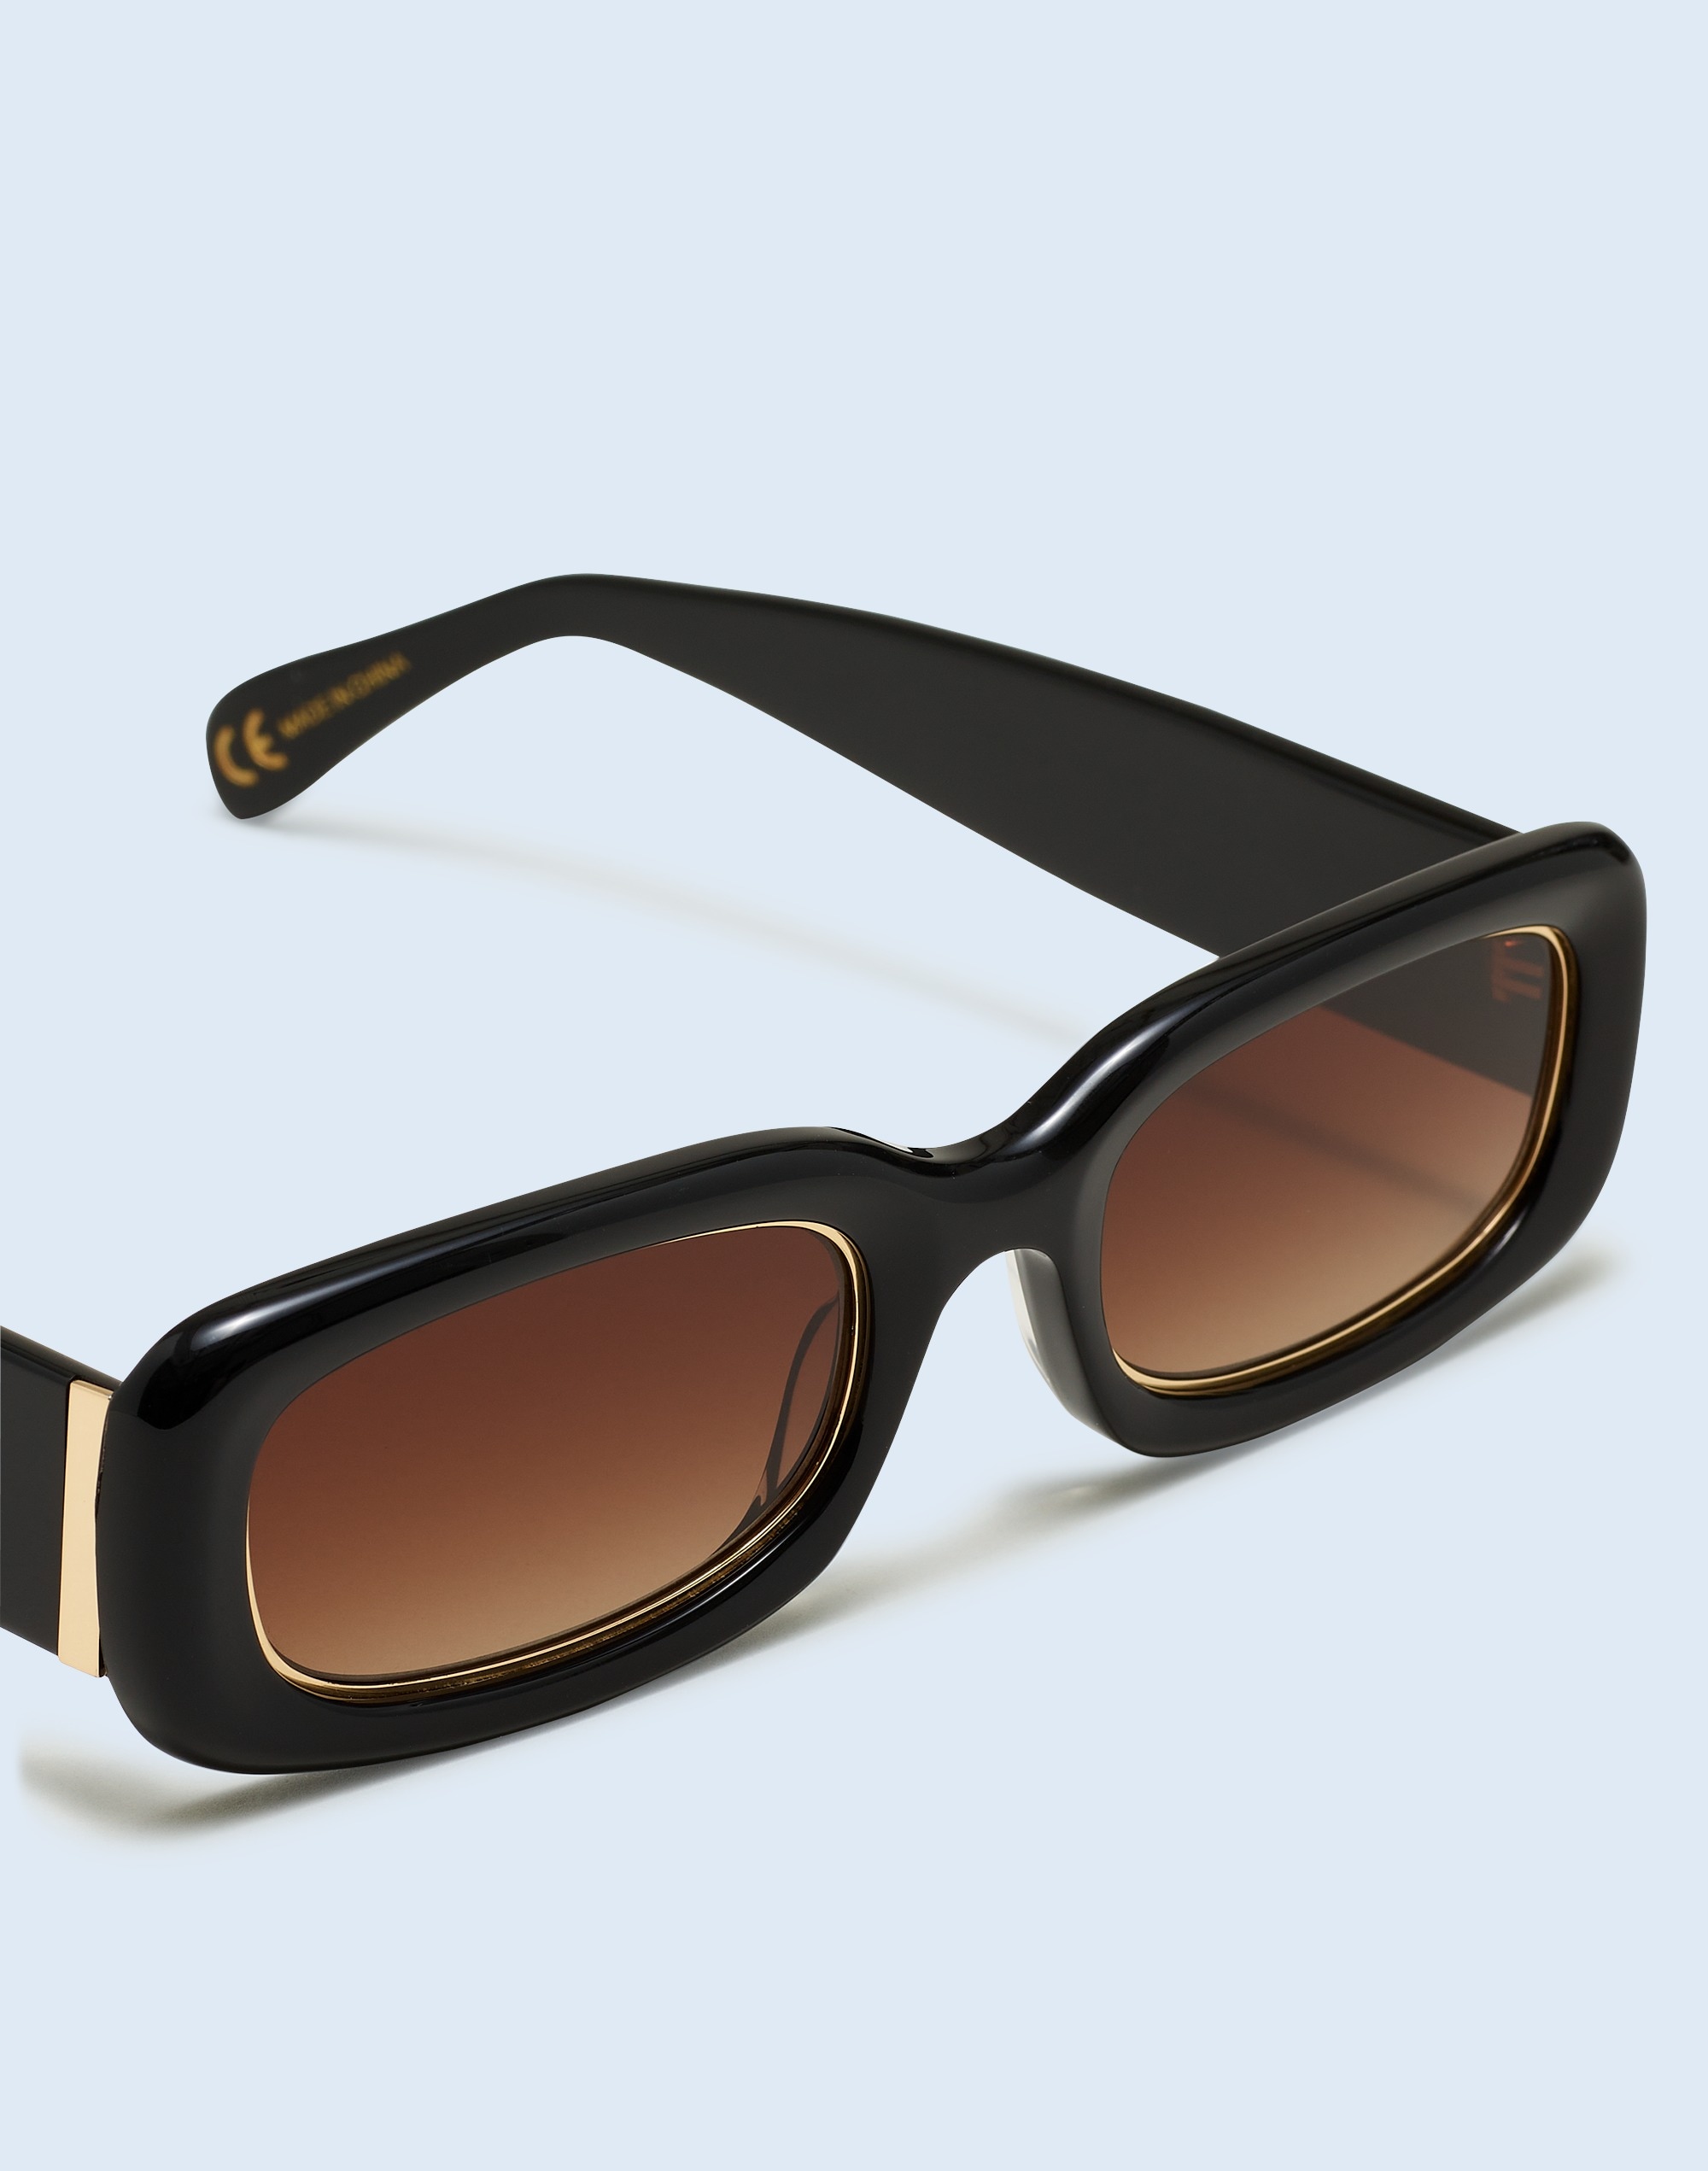 Shop Mw Baymont Square Sunglasses: Metal Accent Edition In True Black